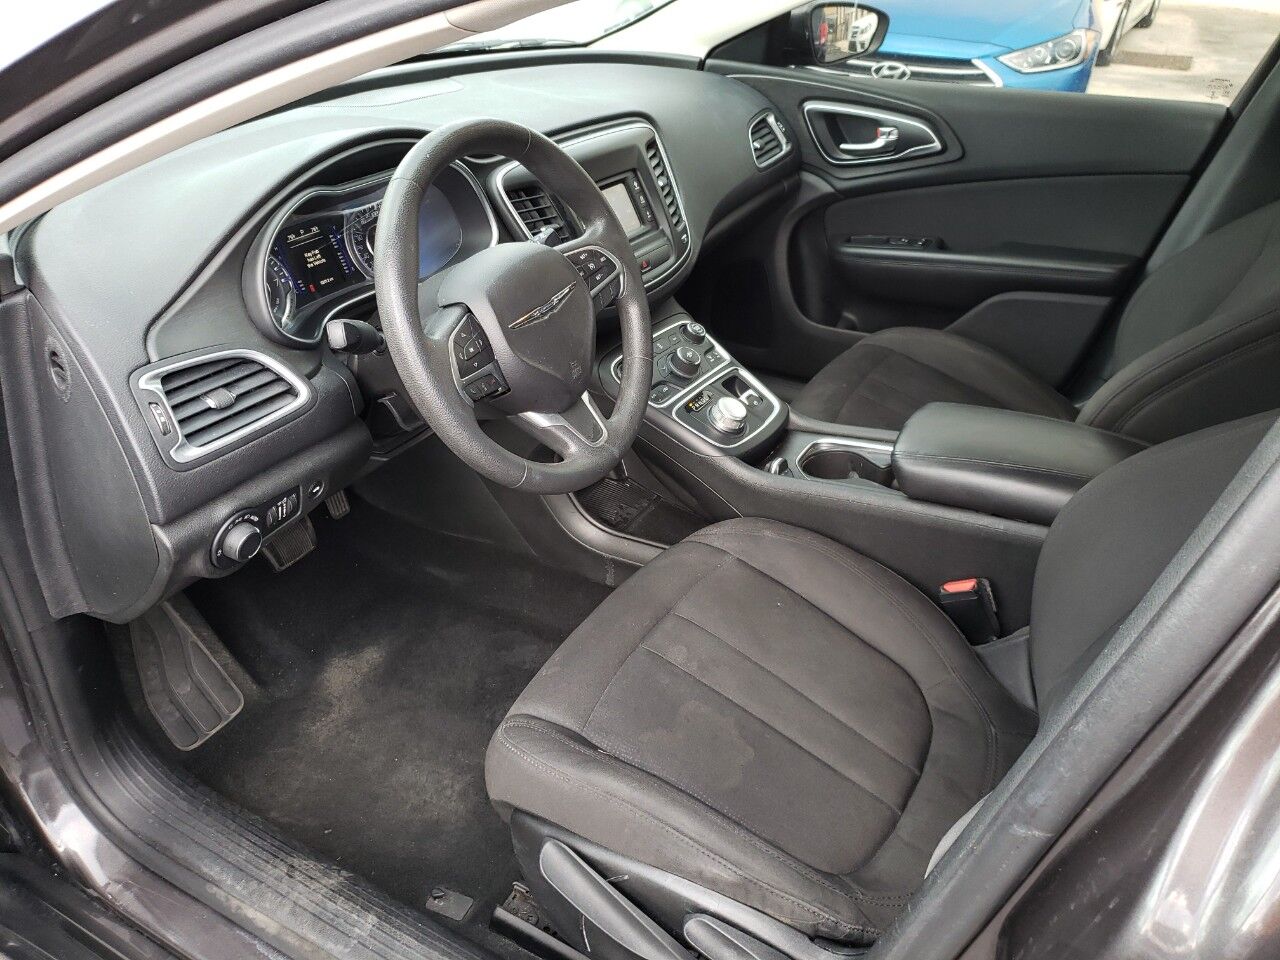 2015 CHRYSLER 200 Sedan - $9,000